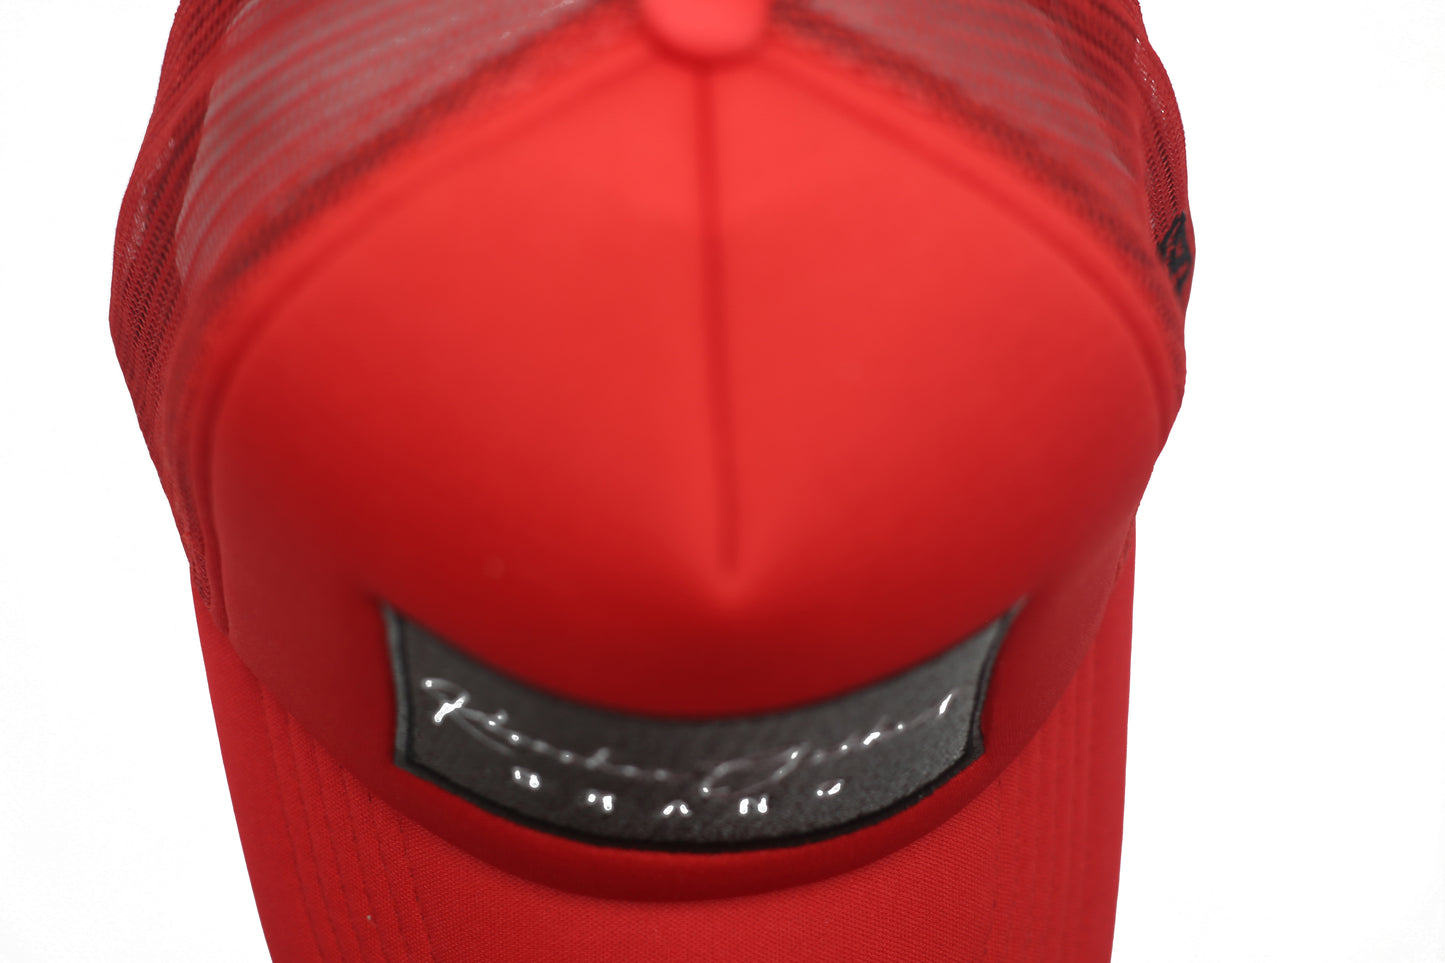 Kososhee Clothing Red Trucker Hat